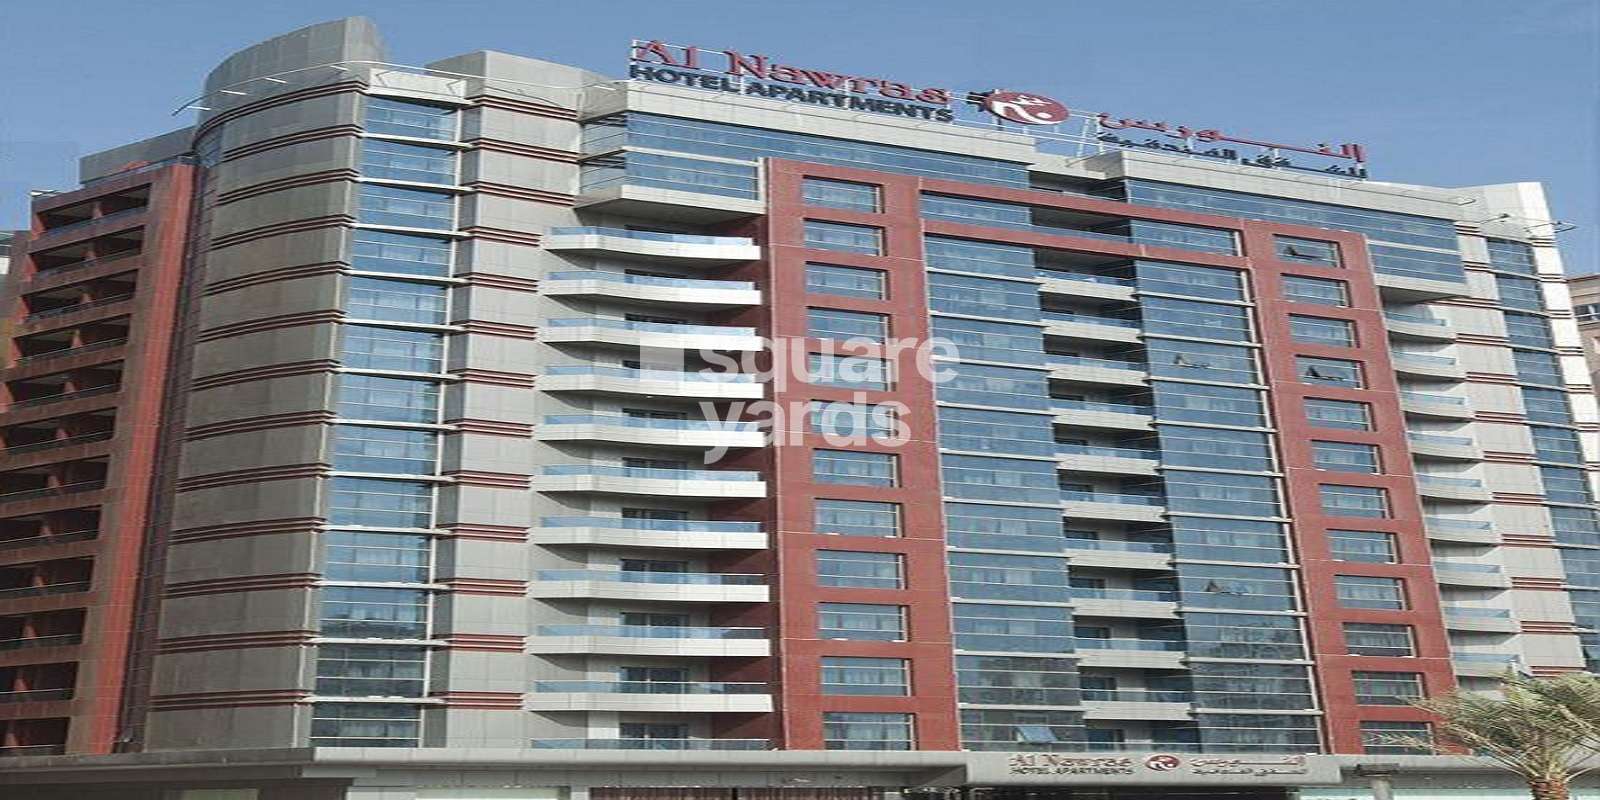 Al Nawras Hotel Apartments Cover Image